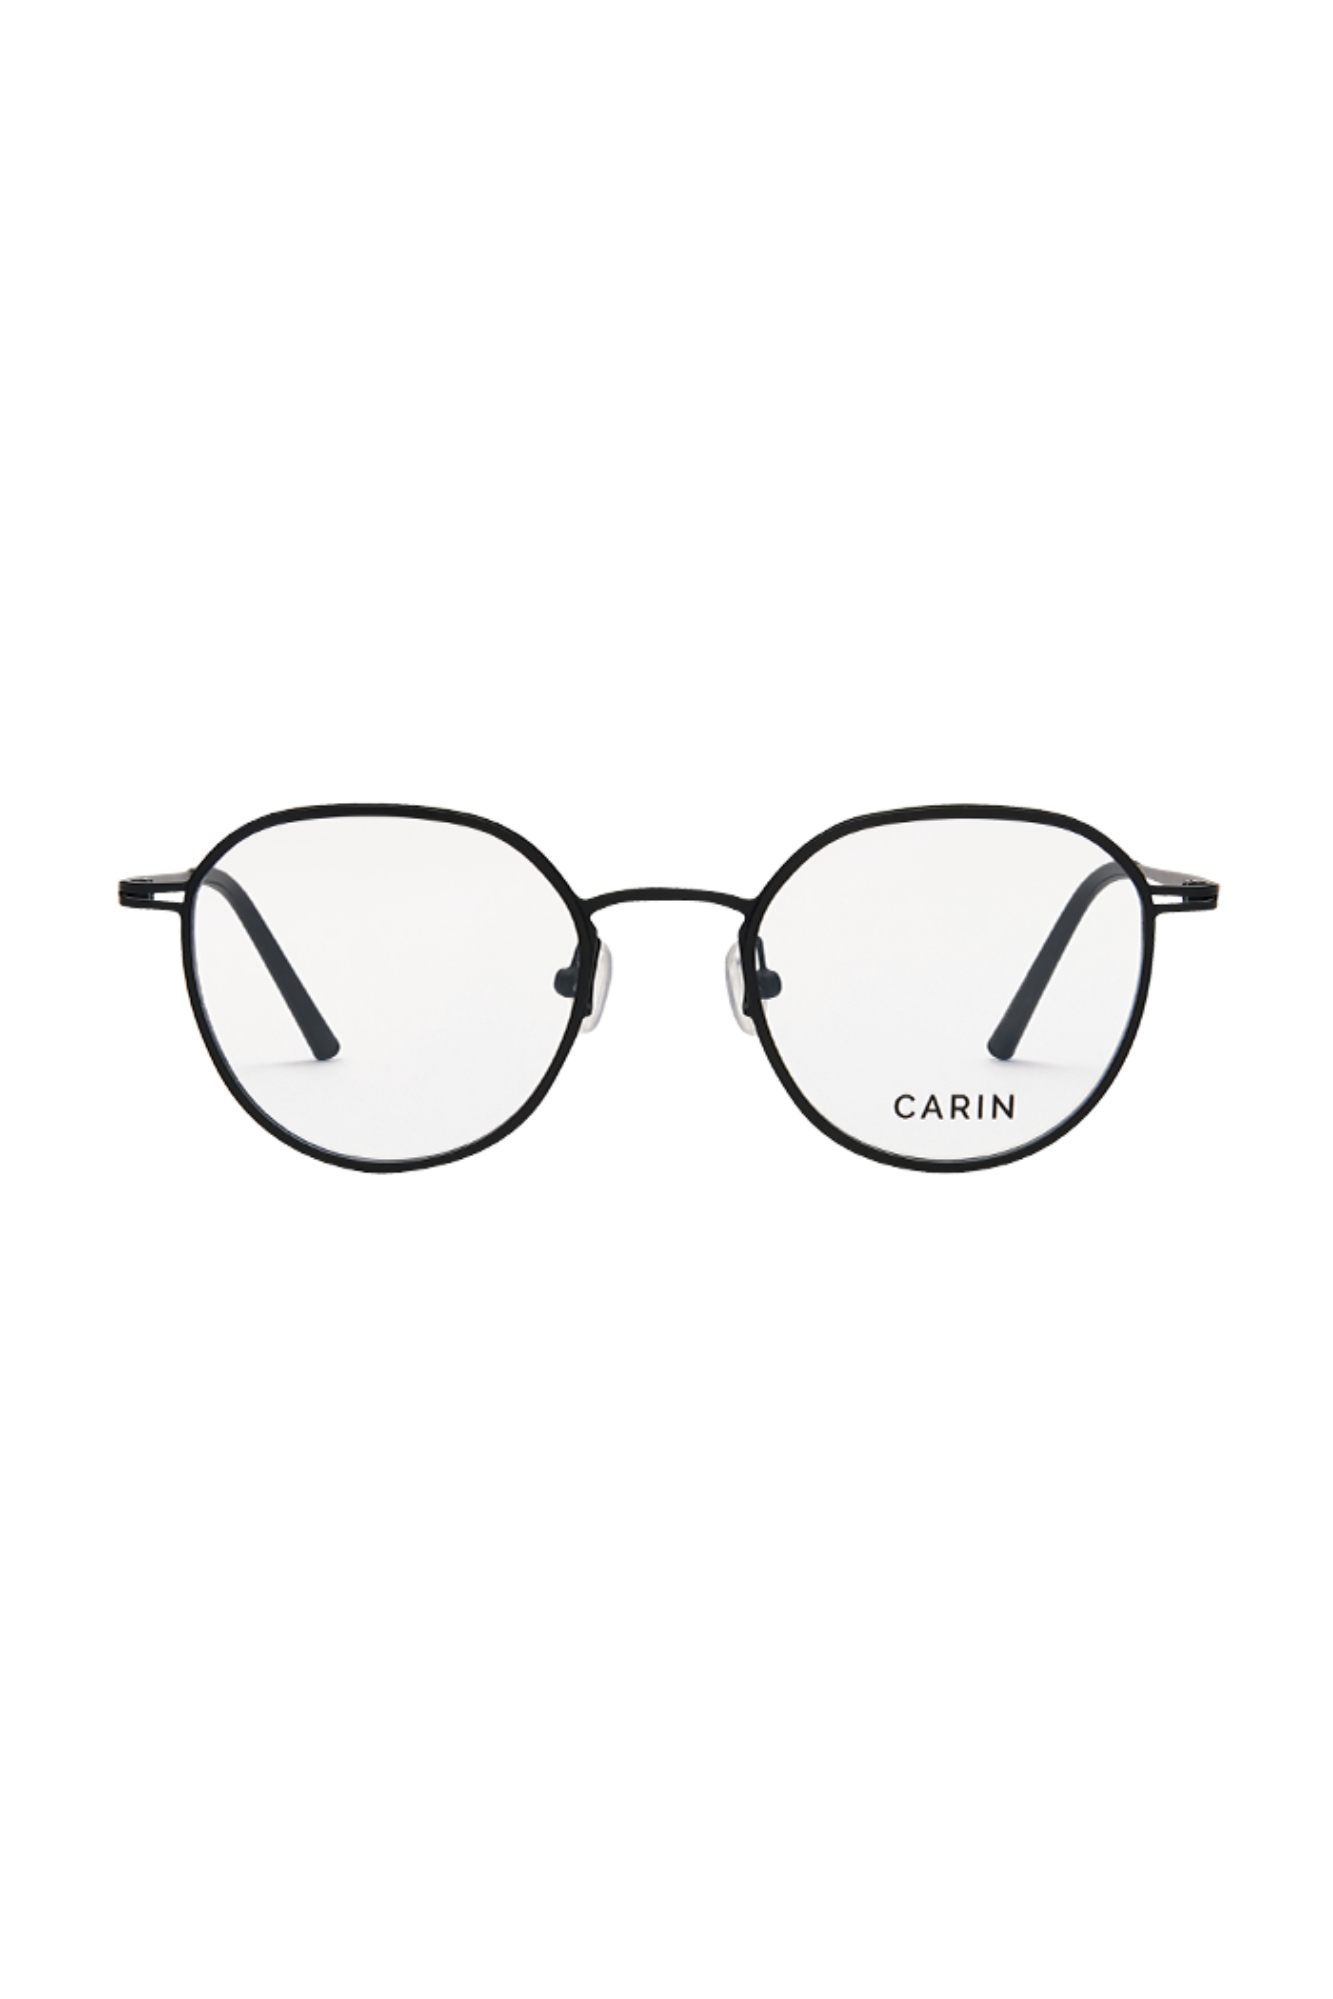 Carin eyeglass frame - Accessories